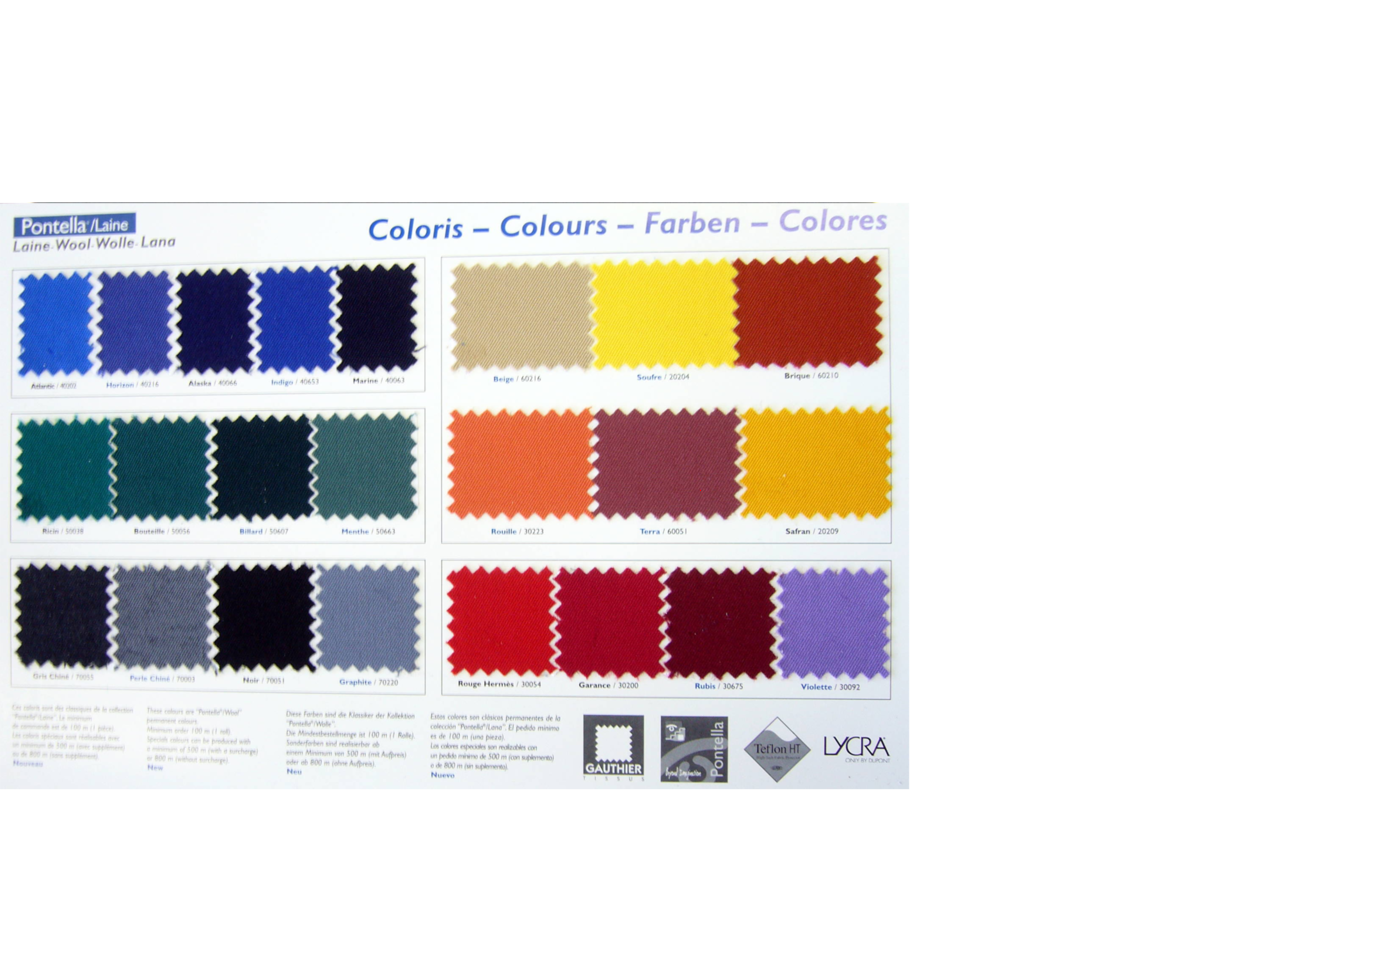 Colour range for the pontella wool fabric line